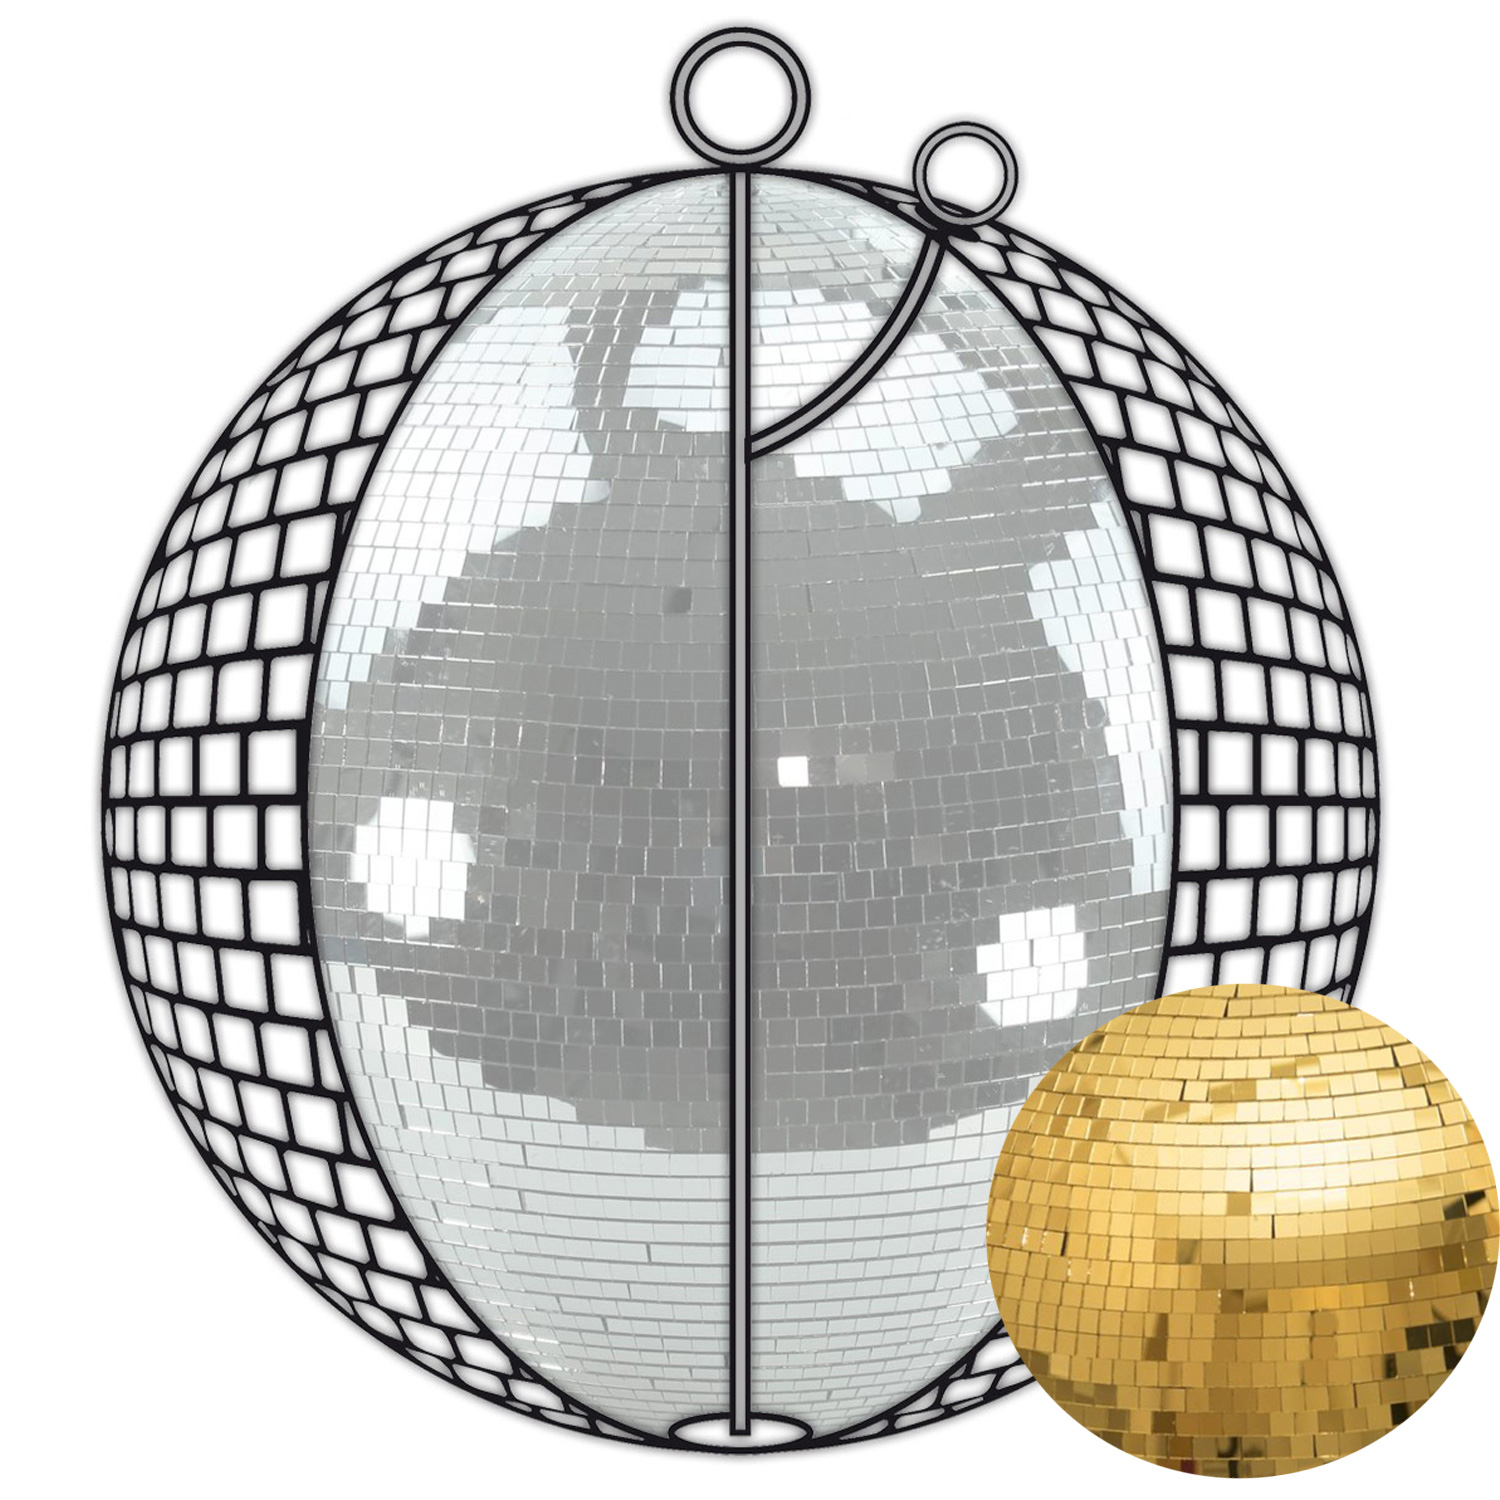 Spiegelkugel 200cm gold- Diskokugel (Discokugel) Party Lichteffekt - Echtglas - mirrorball safety gold color